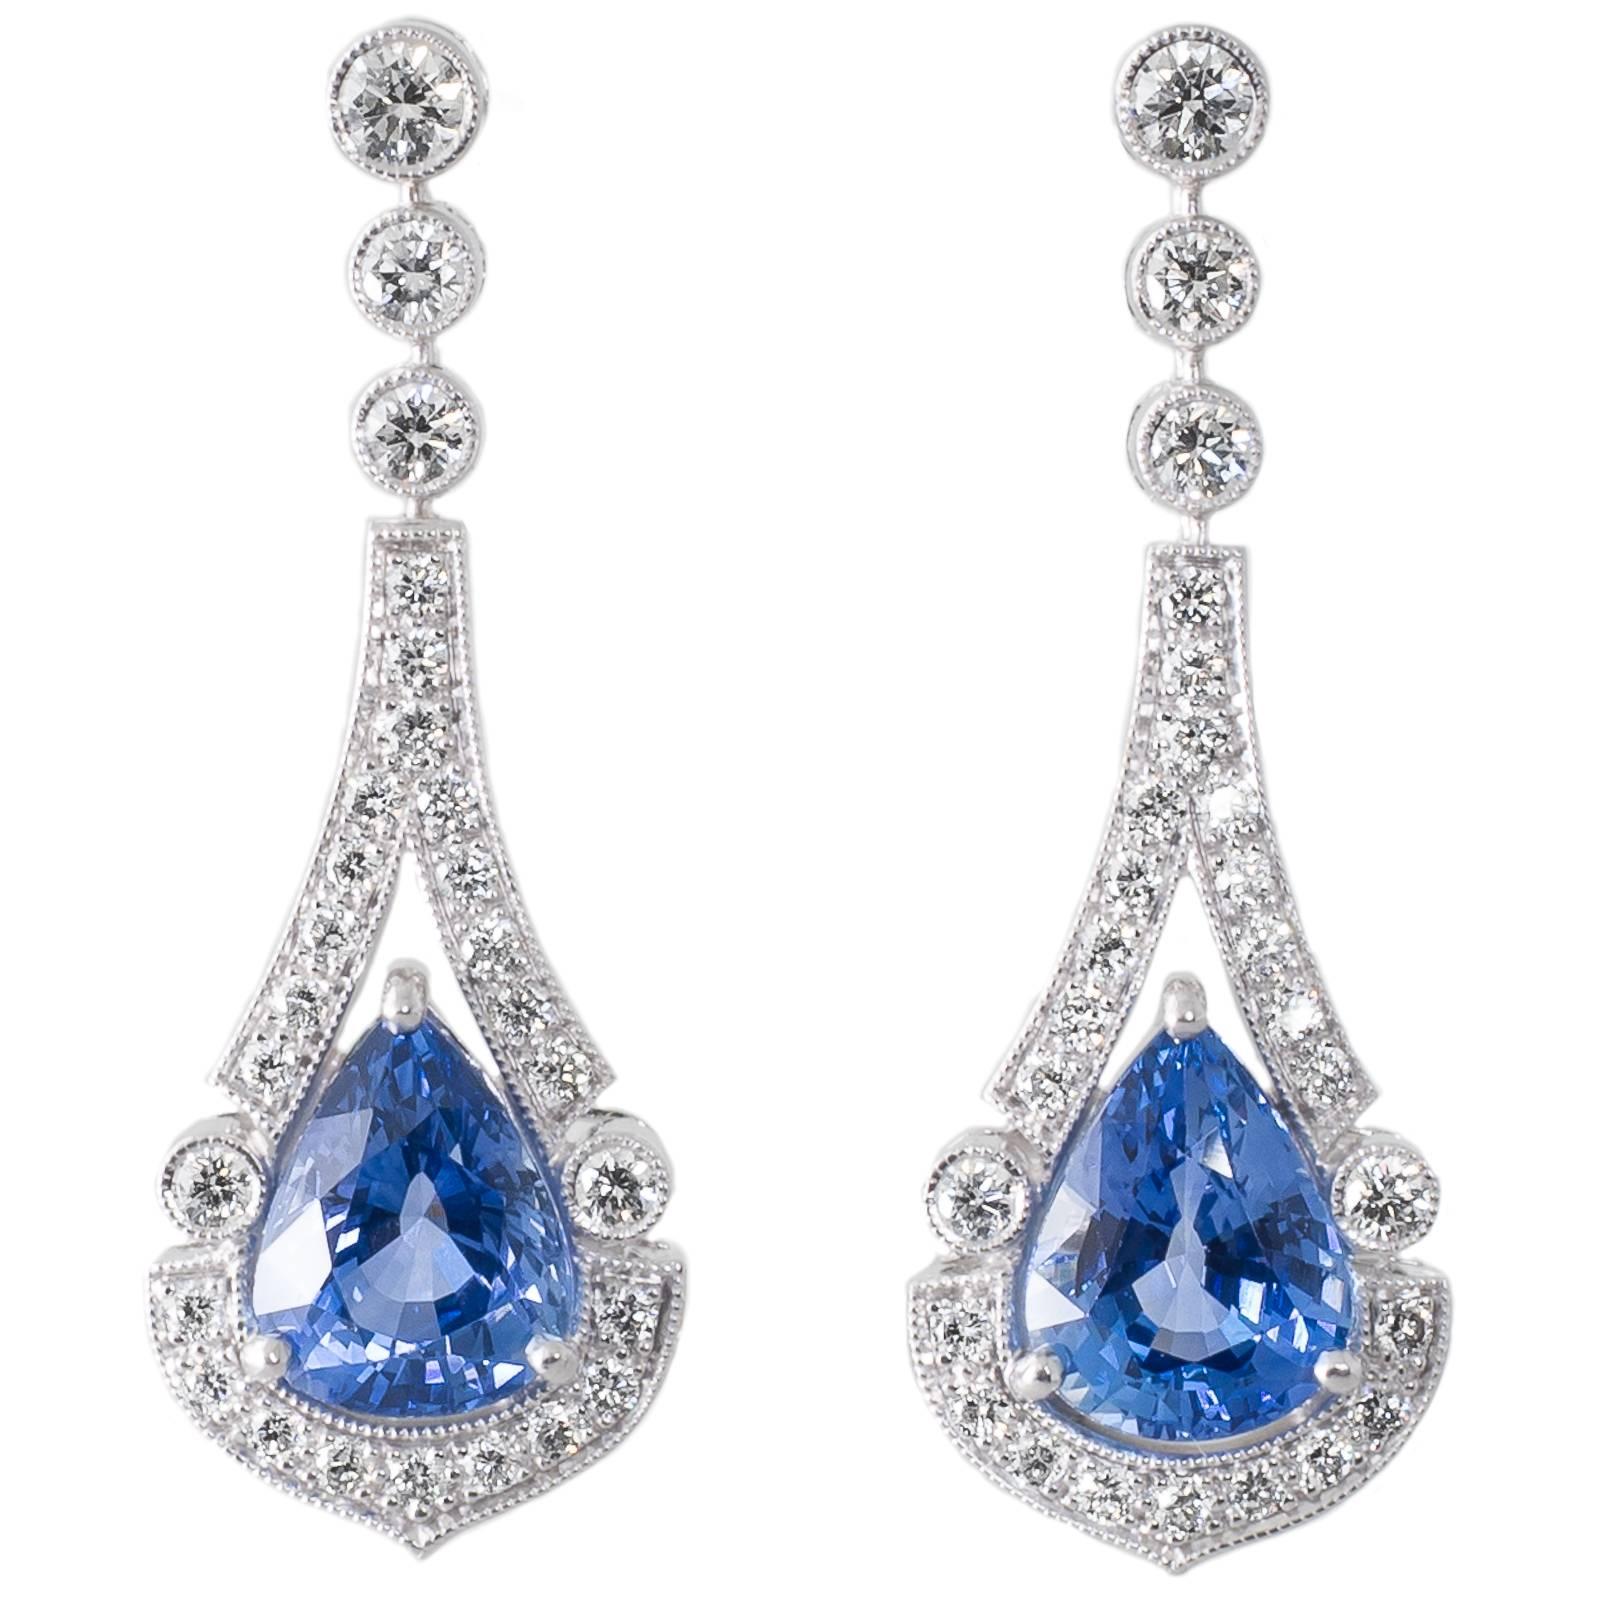 Sri Lankan Sapphire Diamond and White Gold Earrings